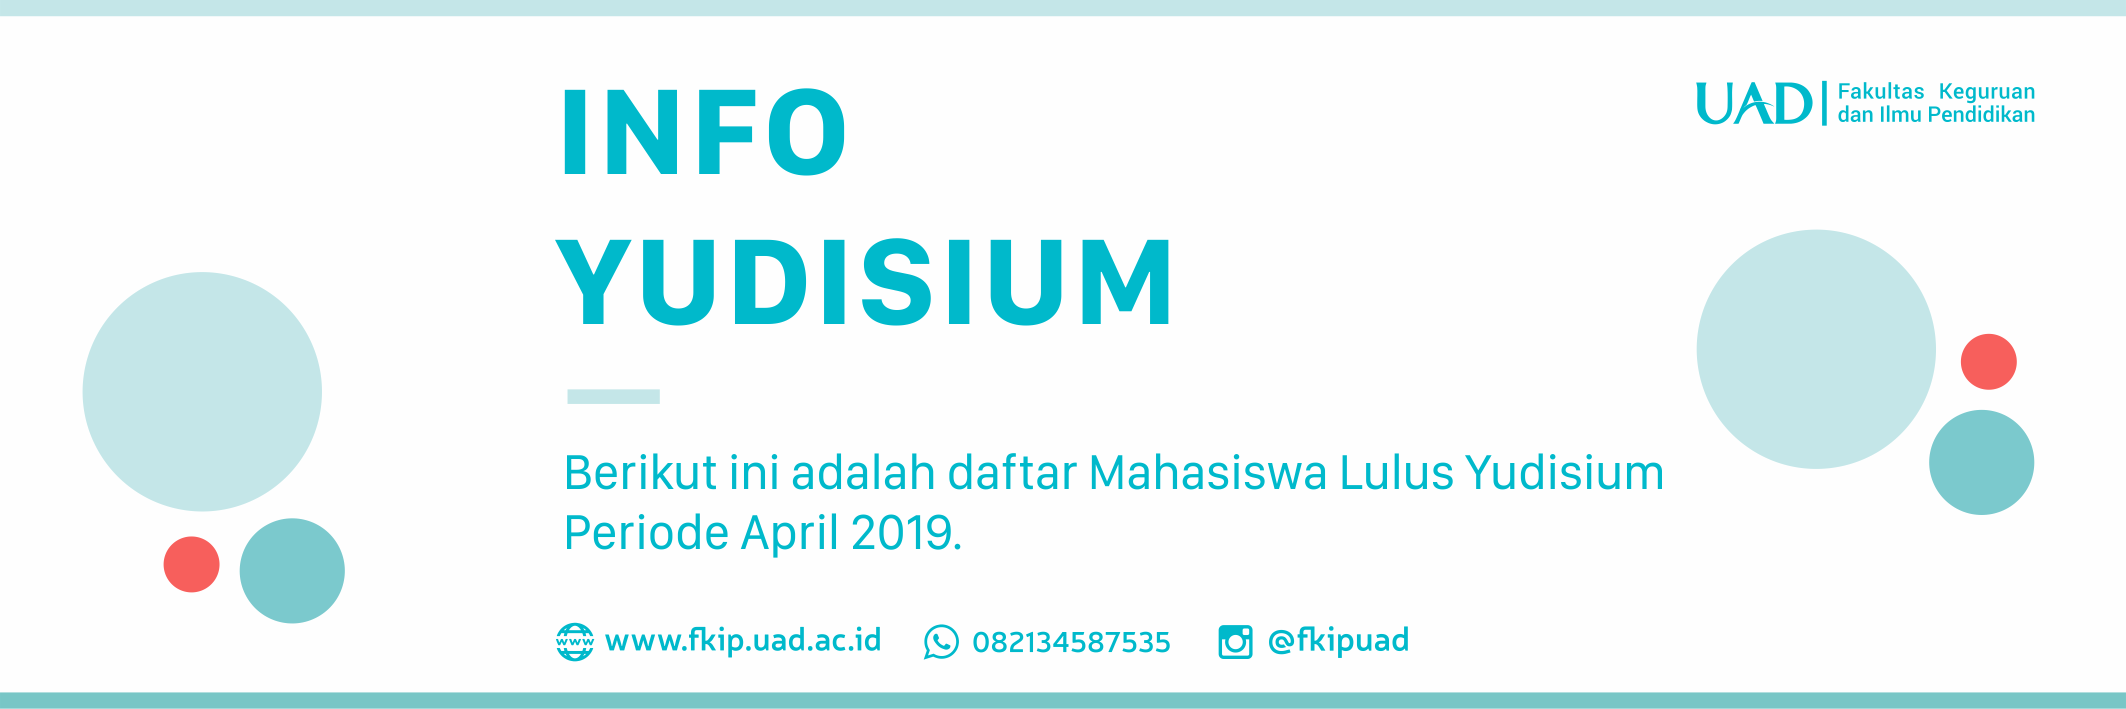 Info Yudisium FKIP UAD Periode April 2019